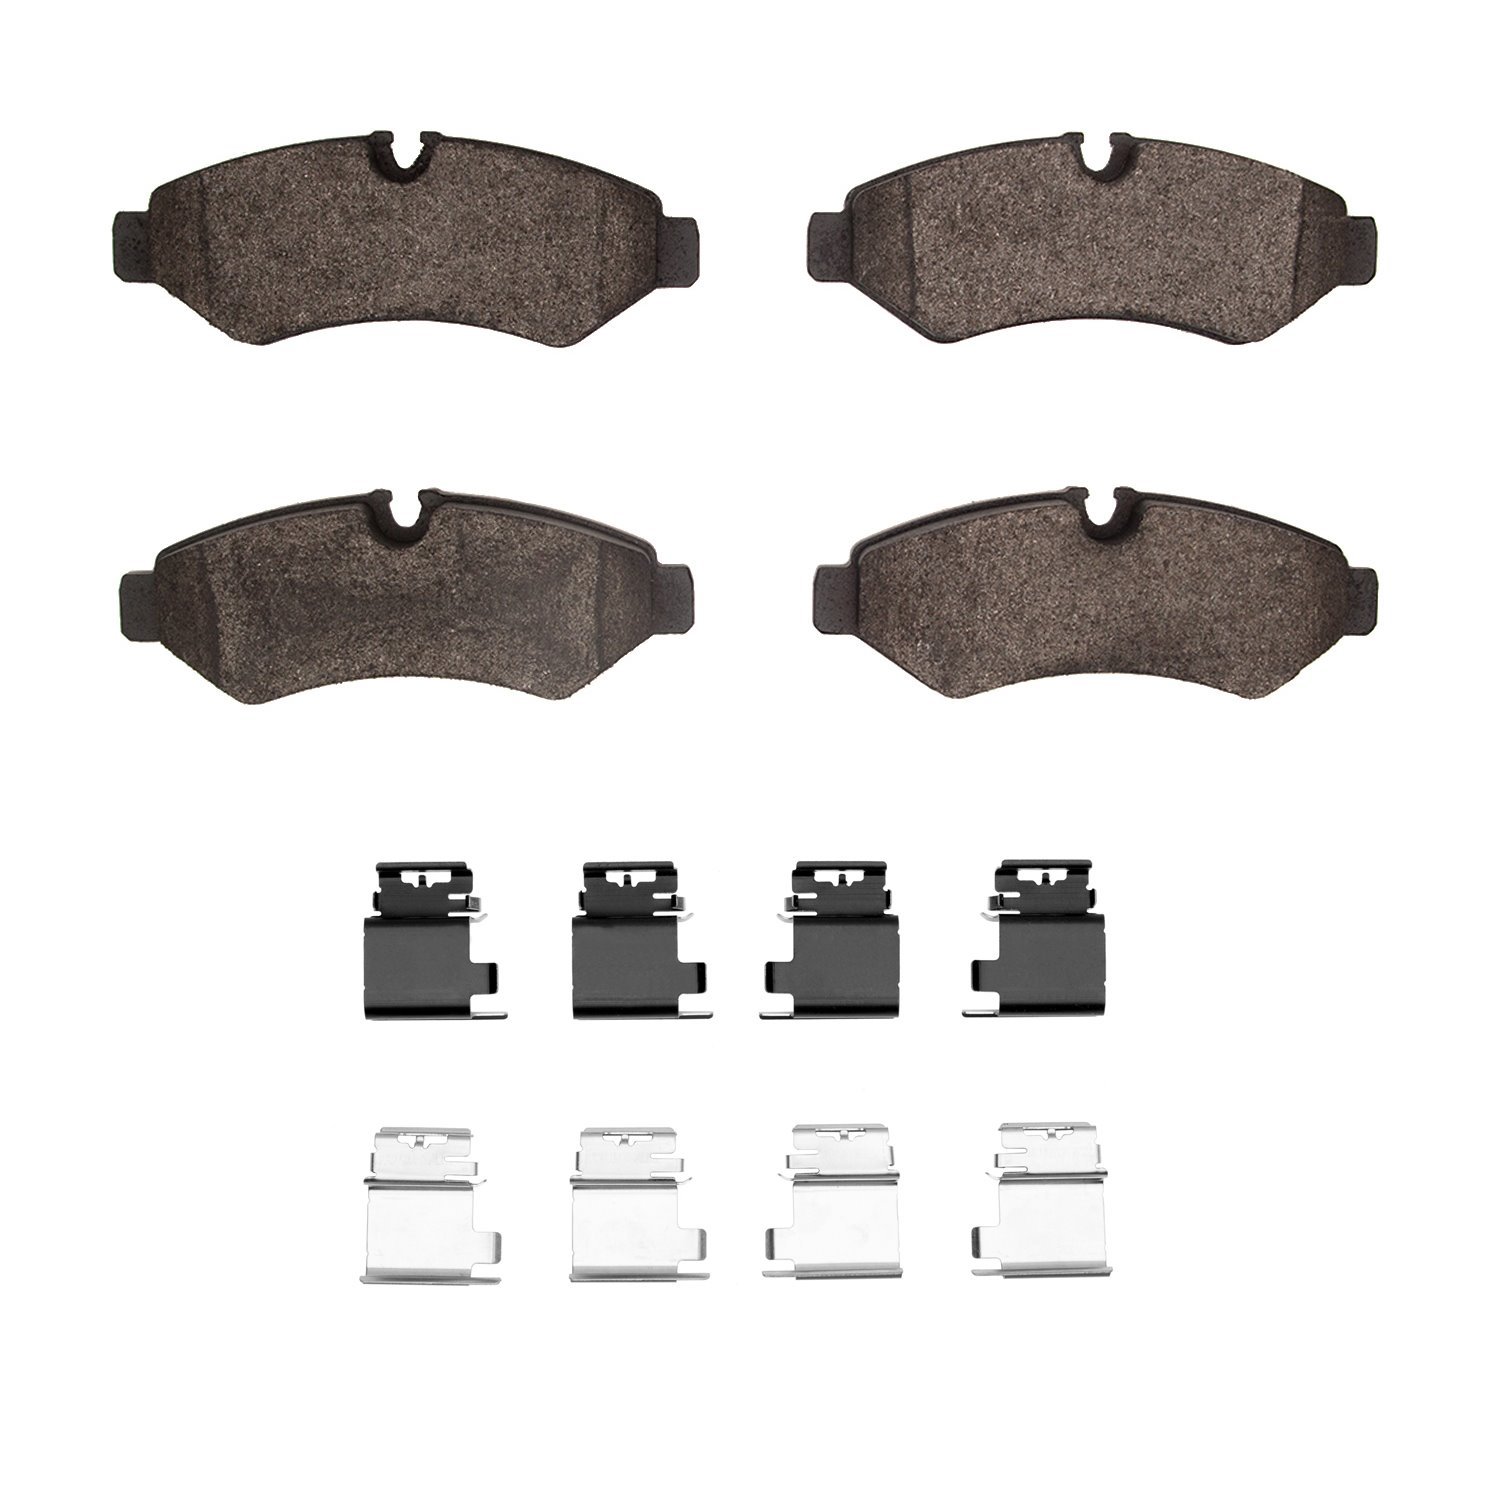 1214-2201-01 Heavy-Duty Brake Pads & Hardware Kit, Fits Select Multiple Makes/Models, Position: Rr,Rear